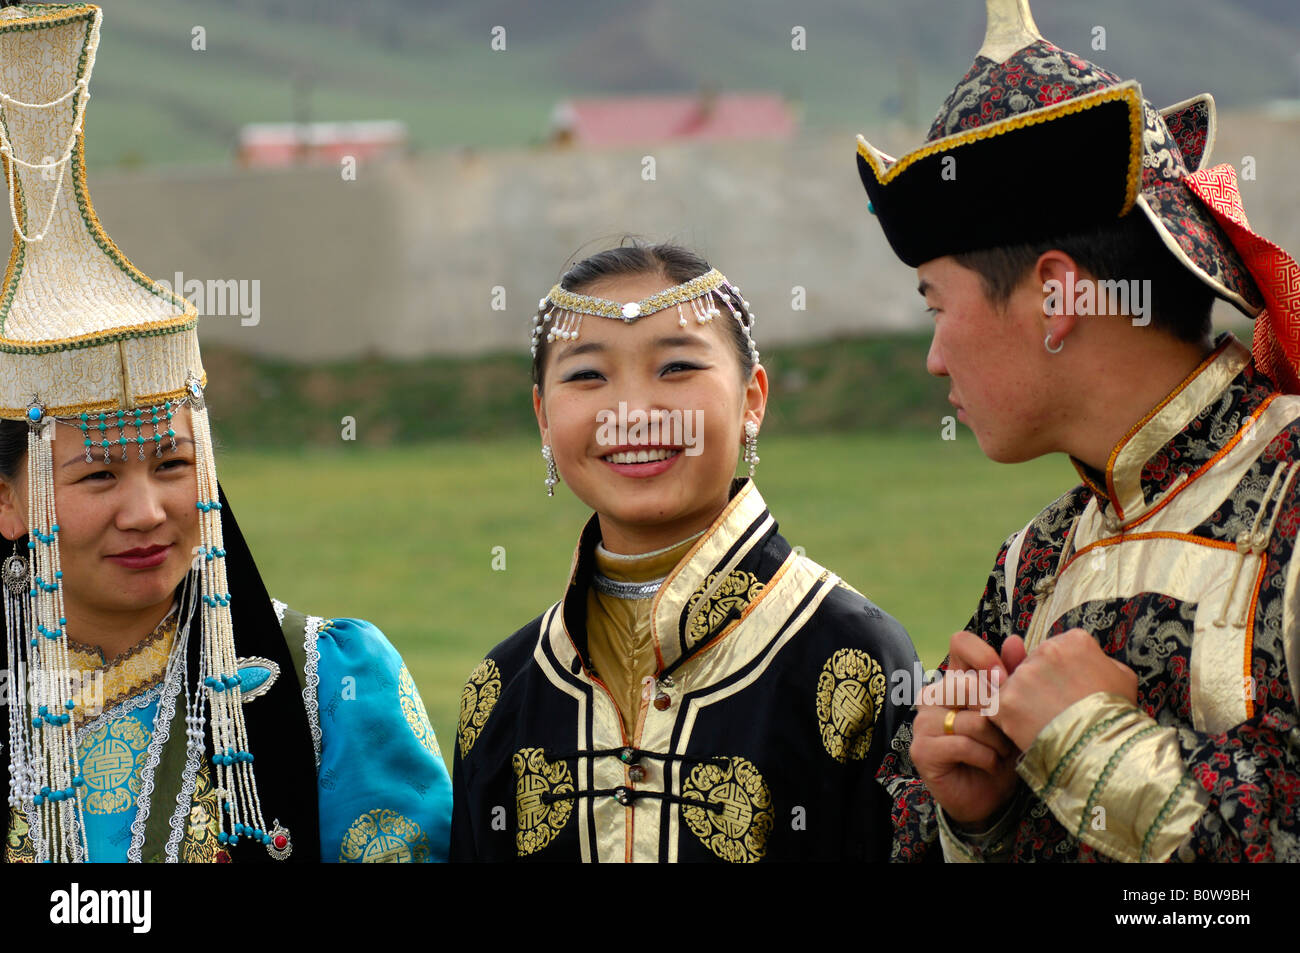 National feast of mongolia -Fotos und -Bildmaterial in hoher Auflösung